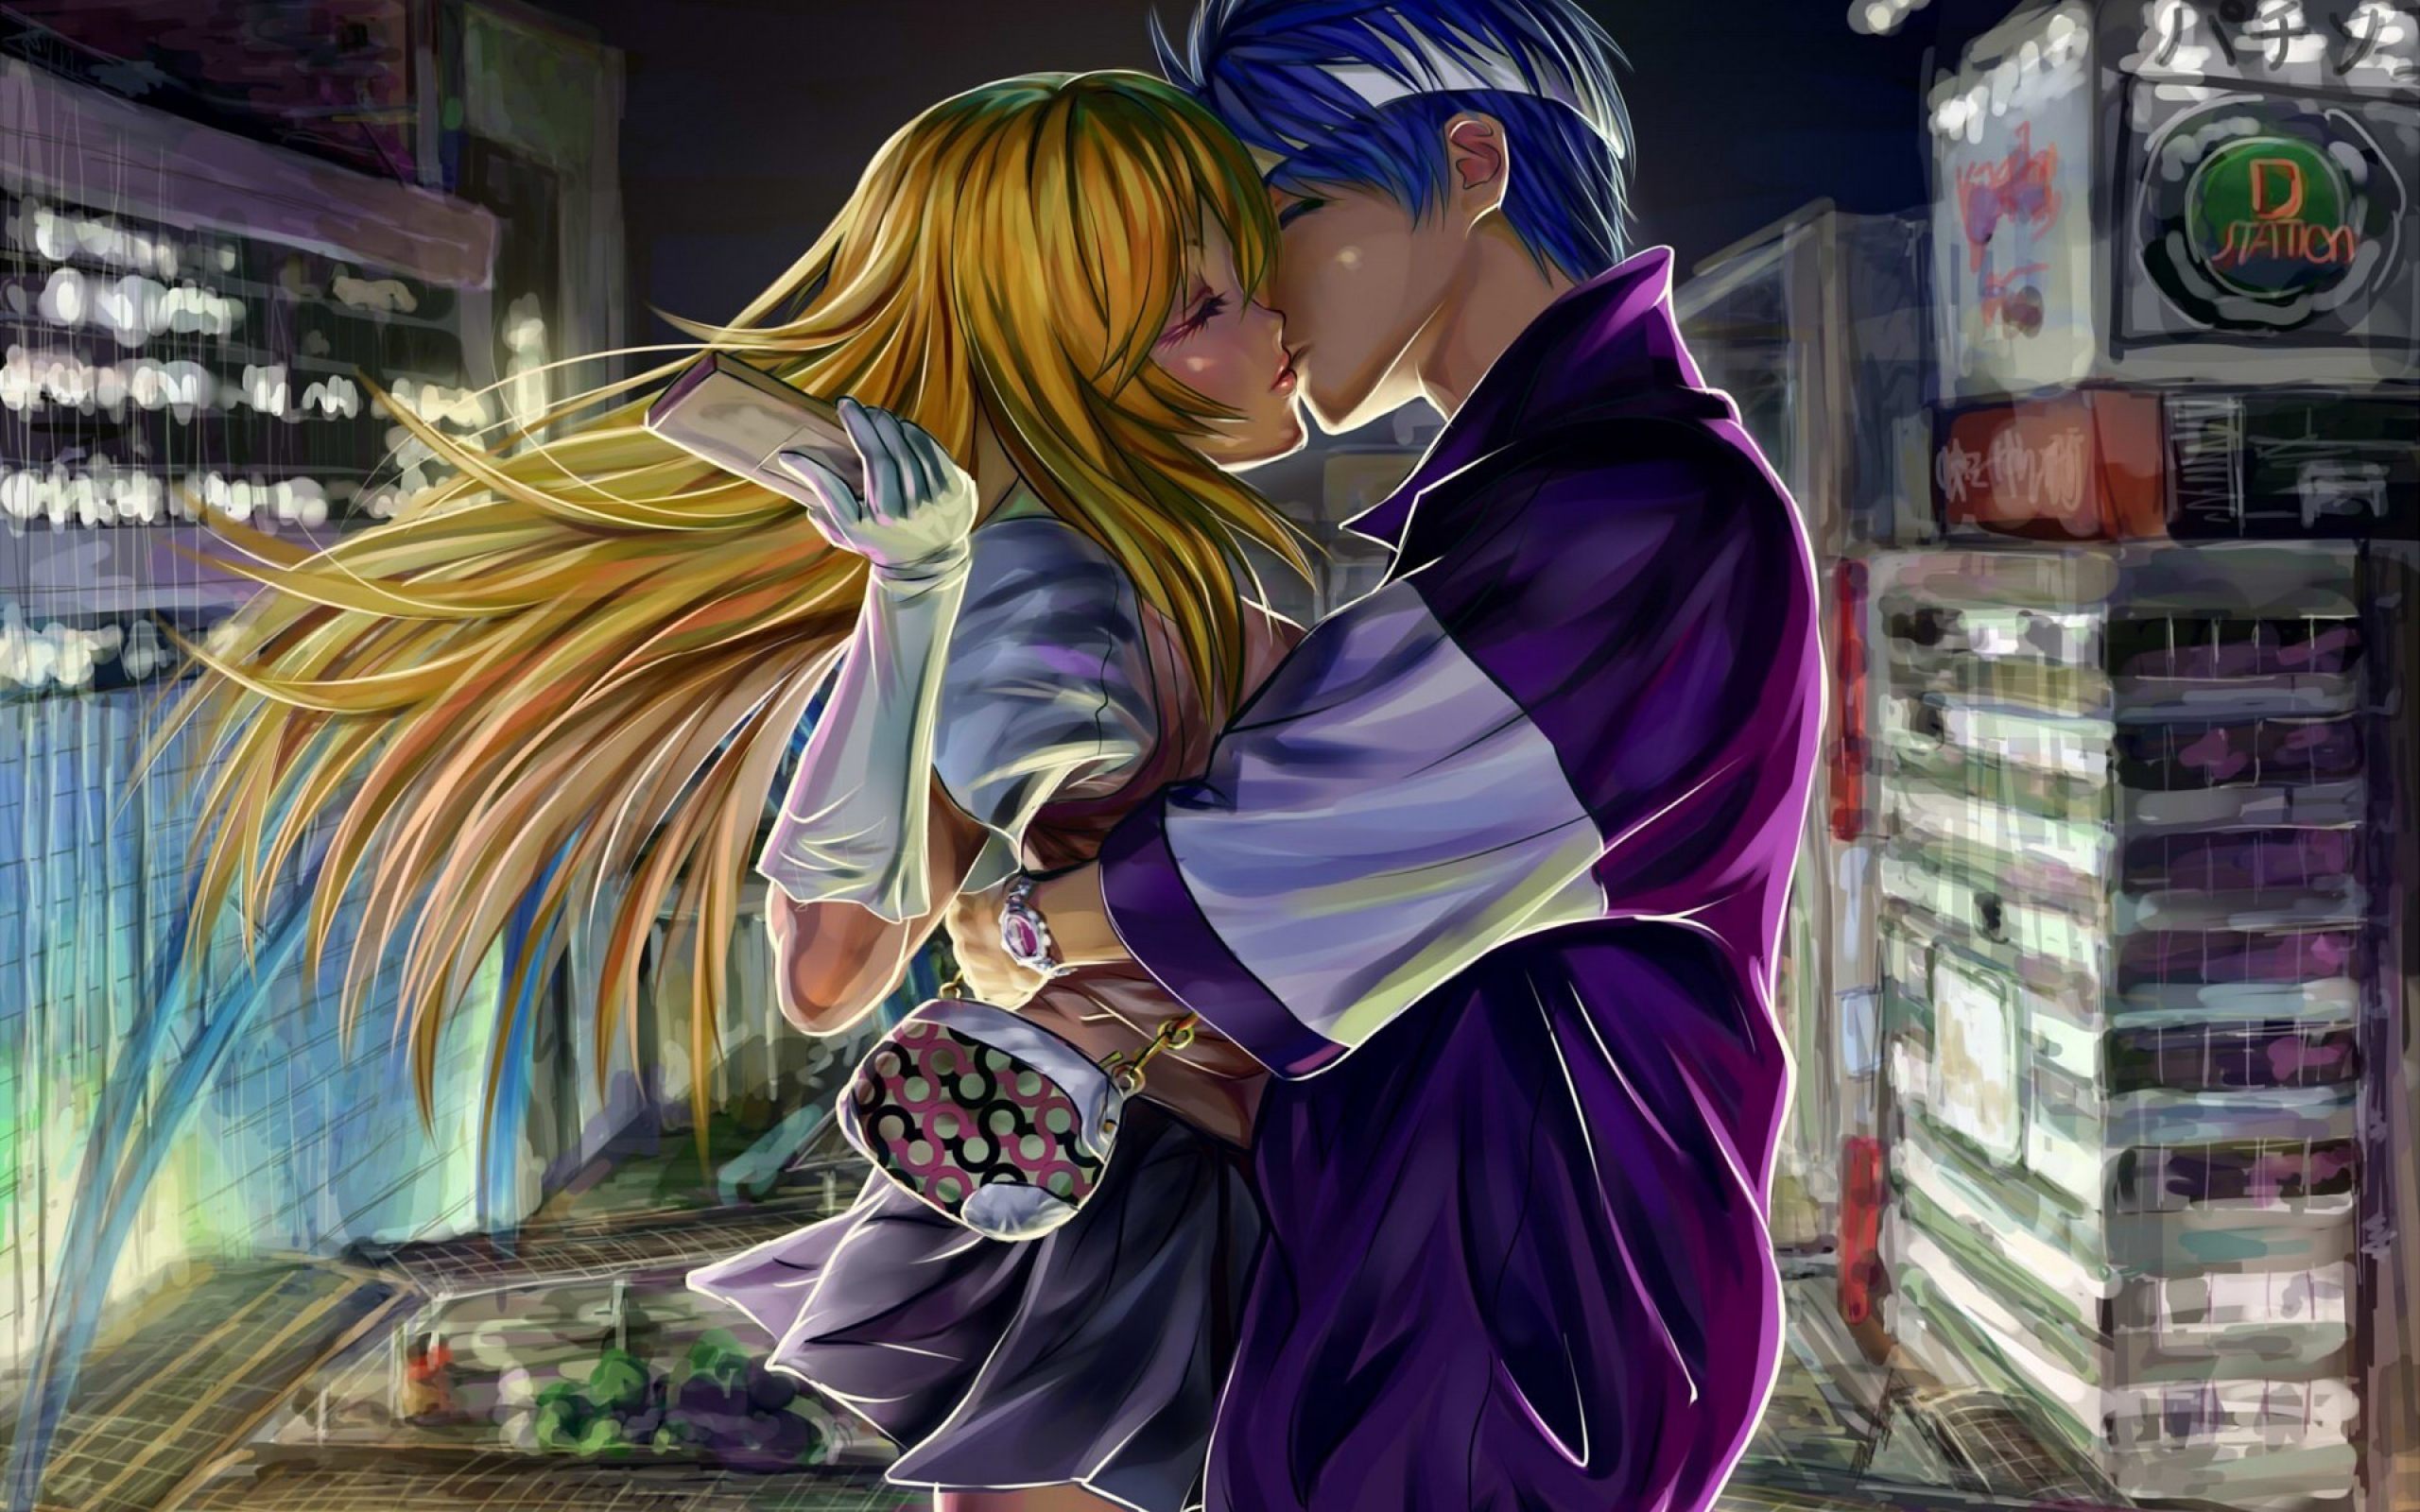 Download Free Cute Anime Couple Backgrounds | PixelsTalk.Net